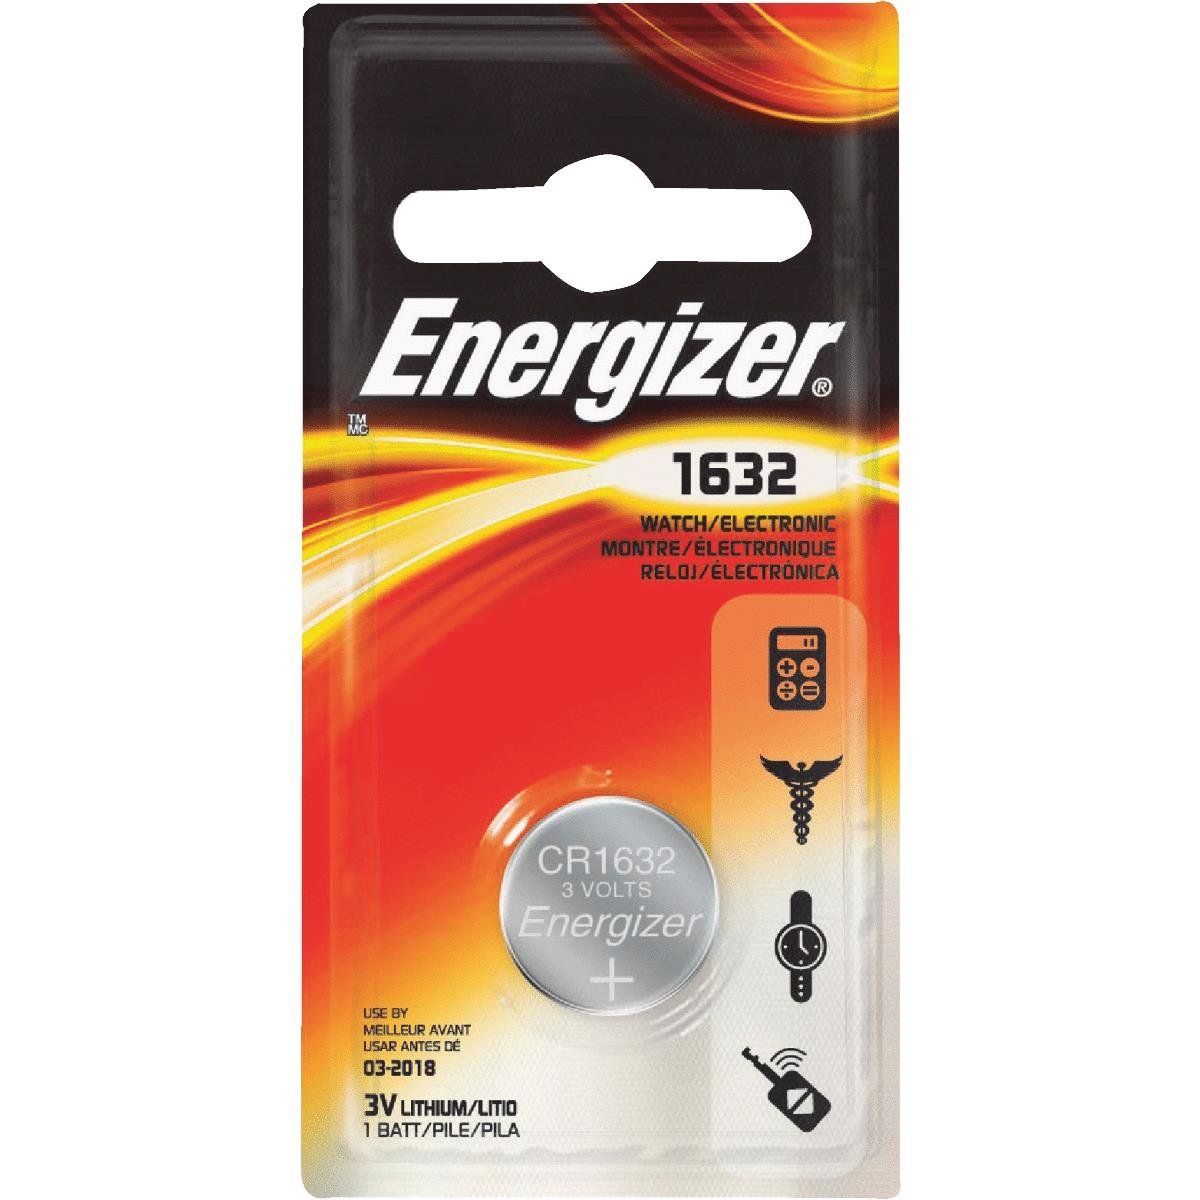 Energizer Lithium 1632 Battery